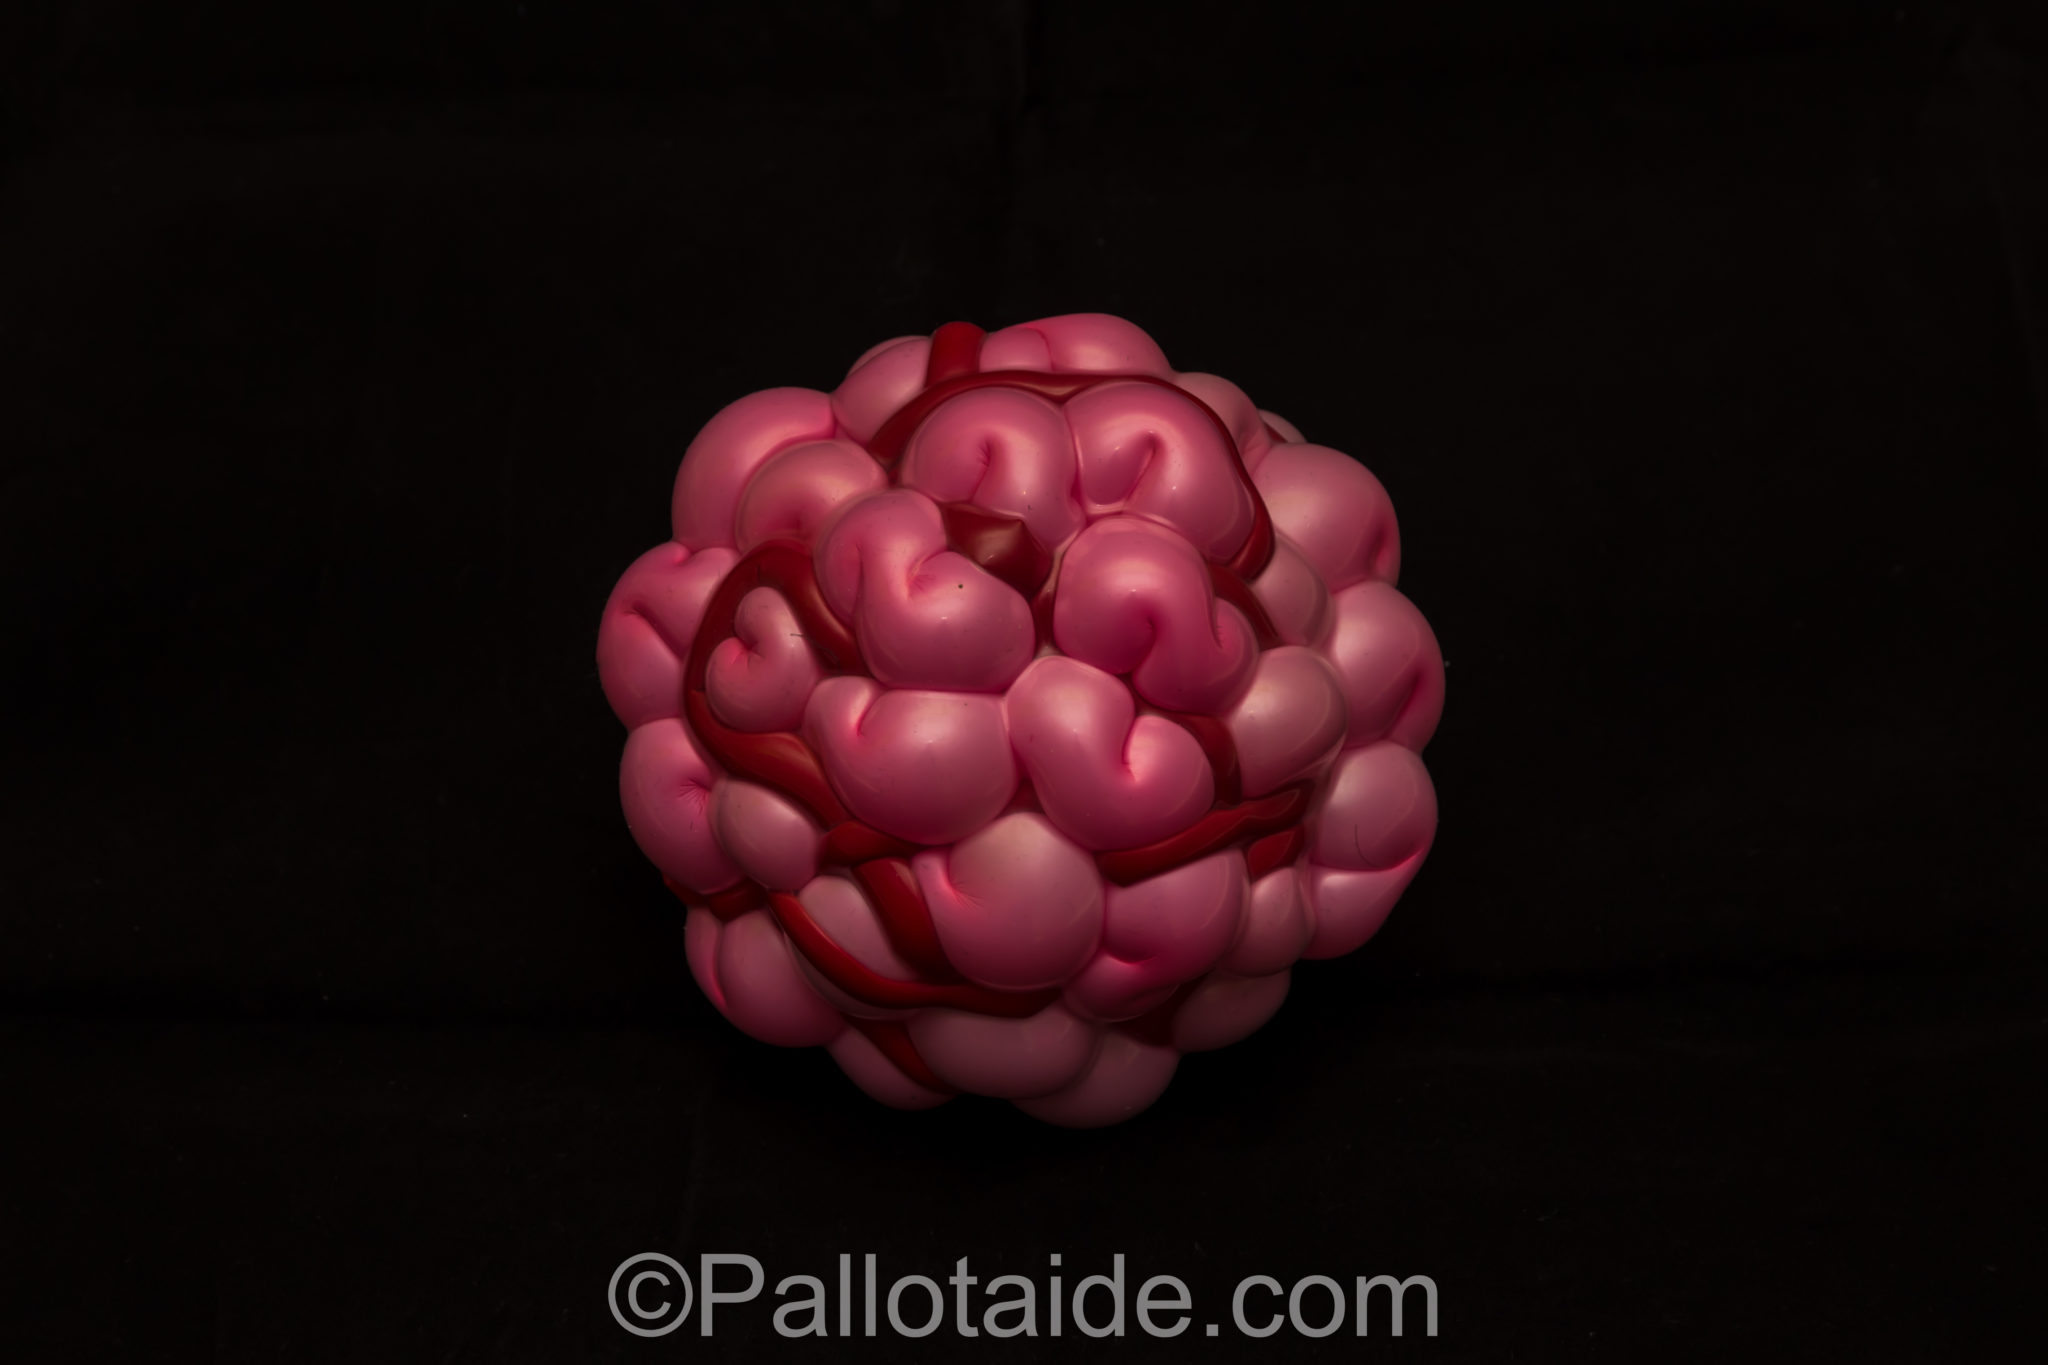 Balloon brain - made using 100% latex balloons.